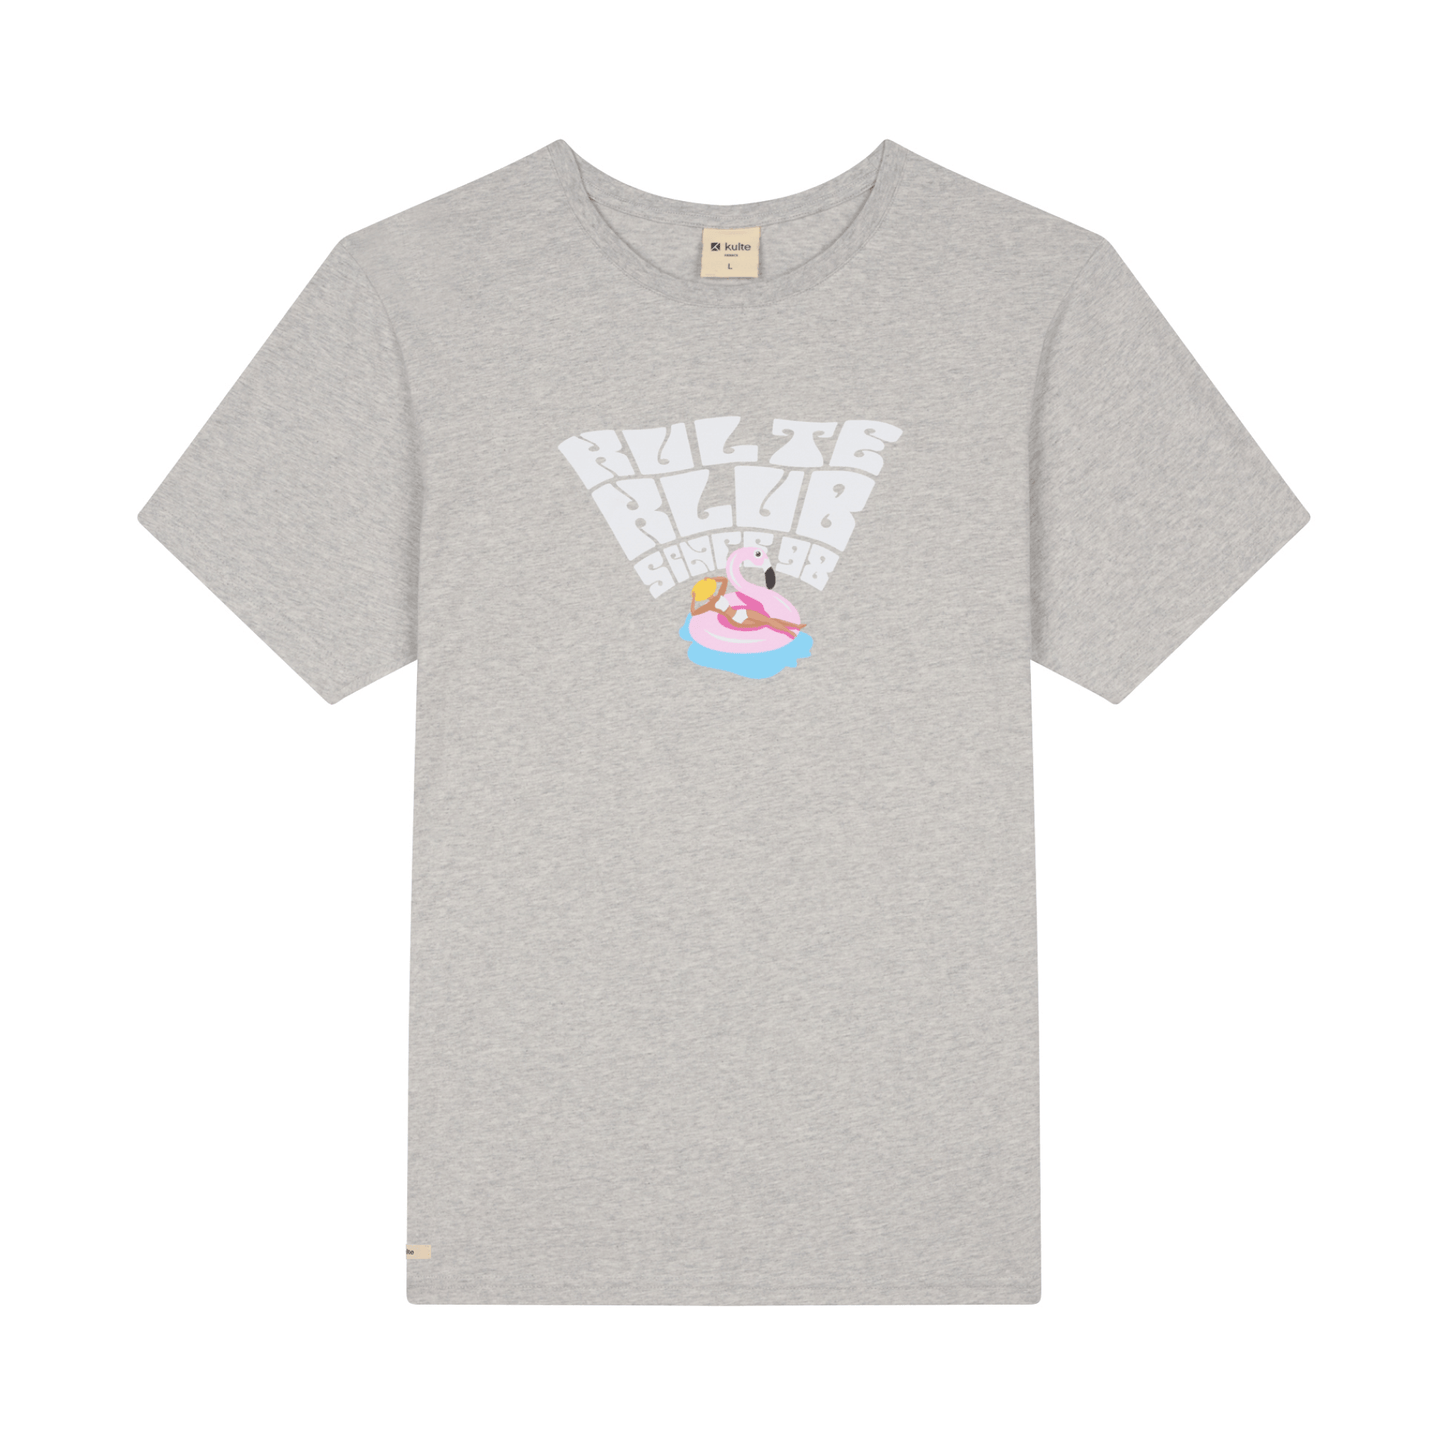 T-shirt Flamingo